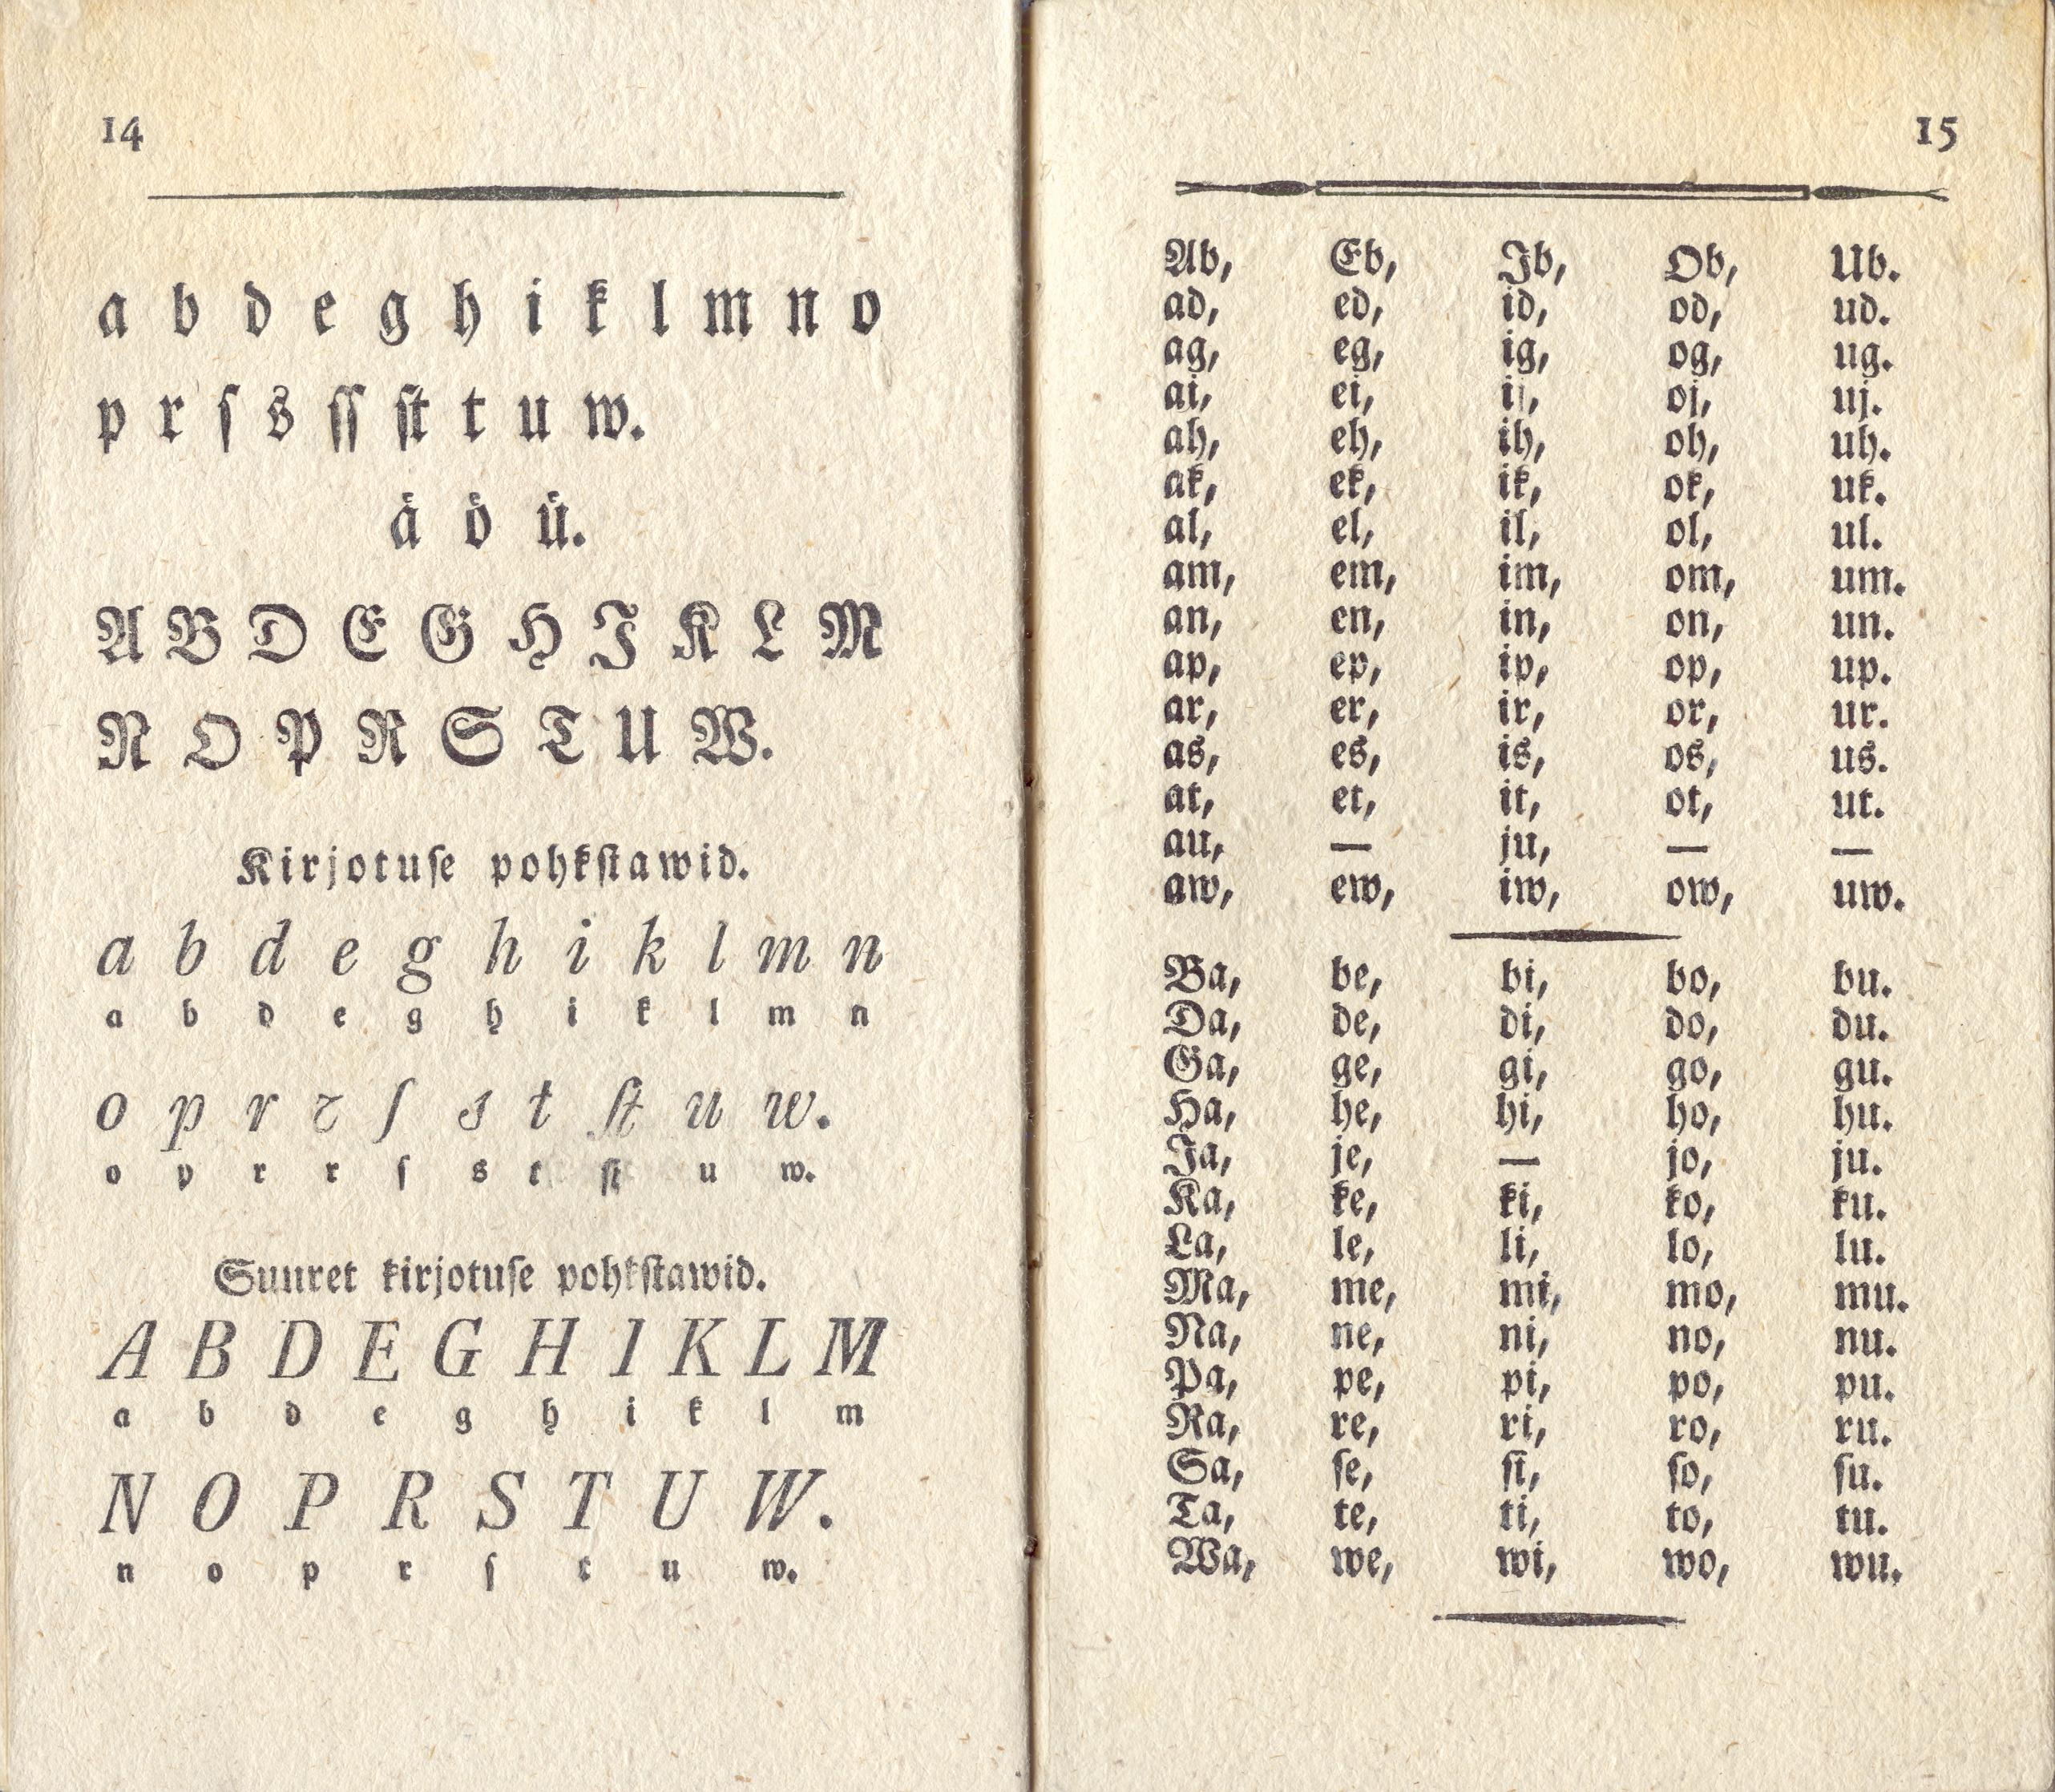 ABD ehk Luggemise-Ramat Lastele (1795) | 9. (14-15) Haupttext